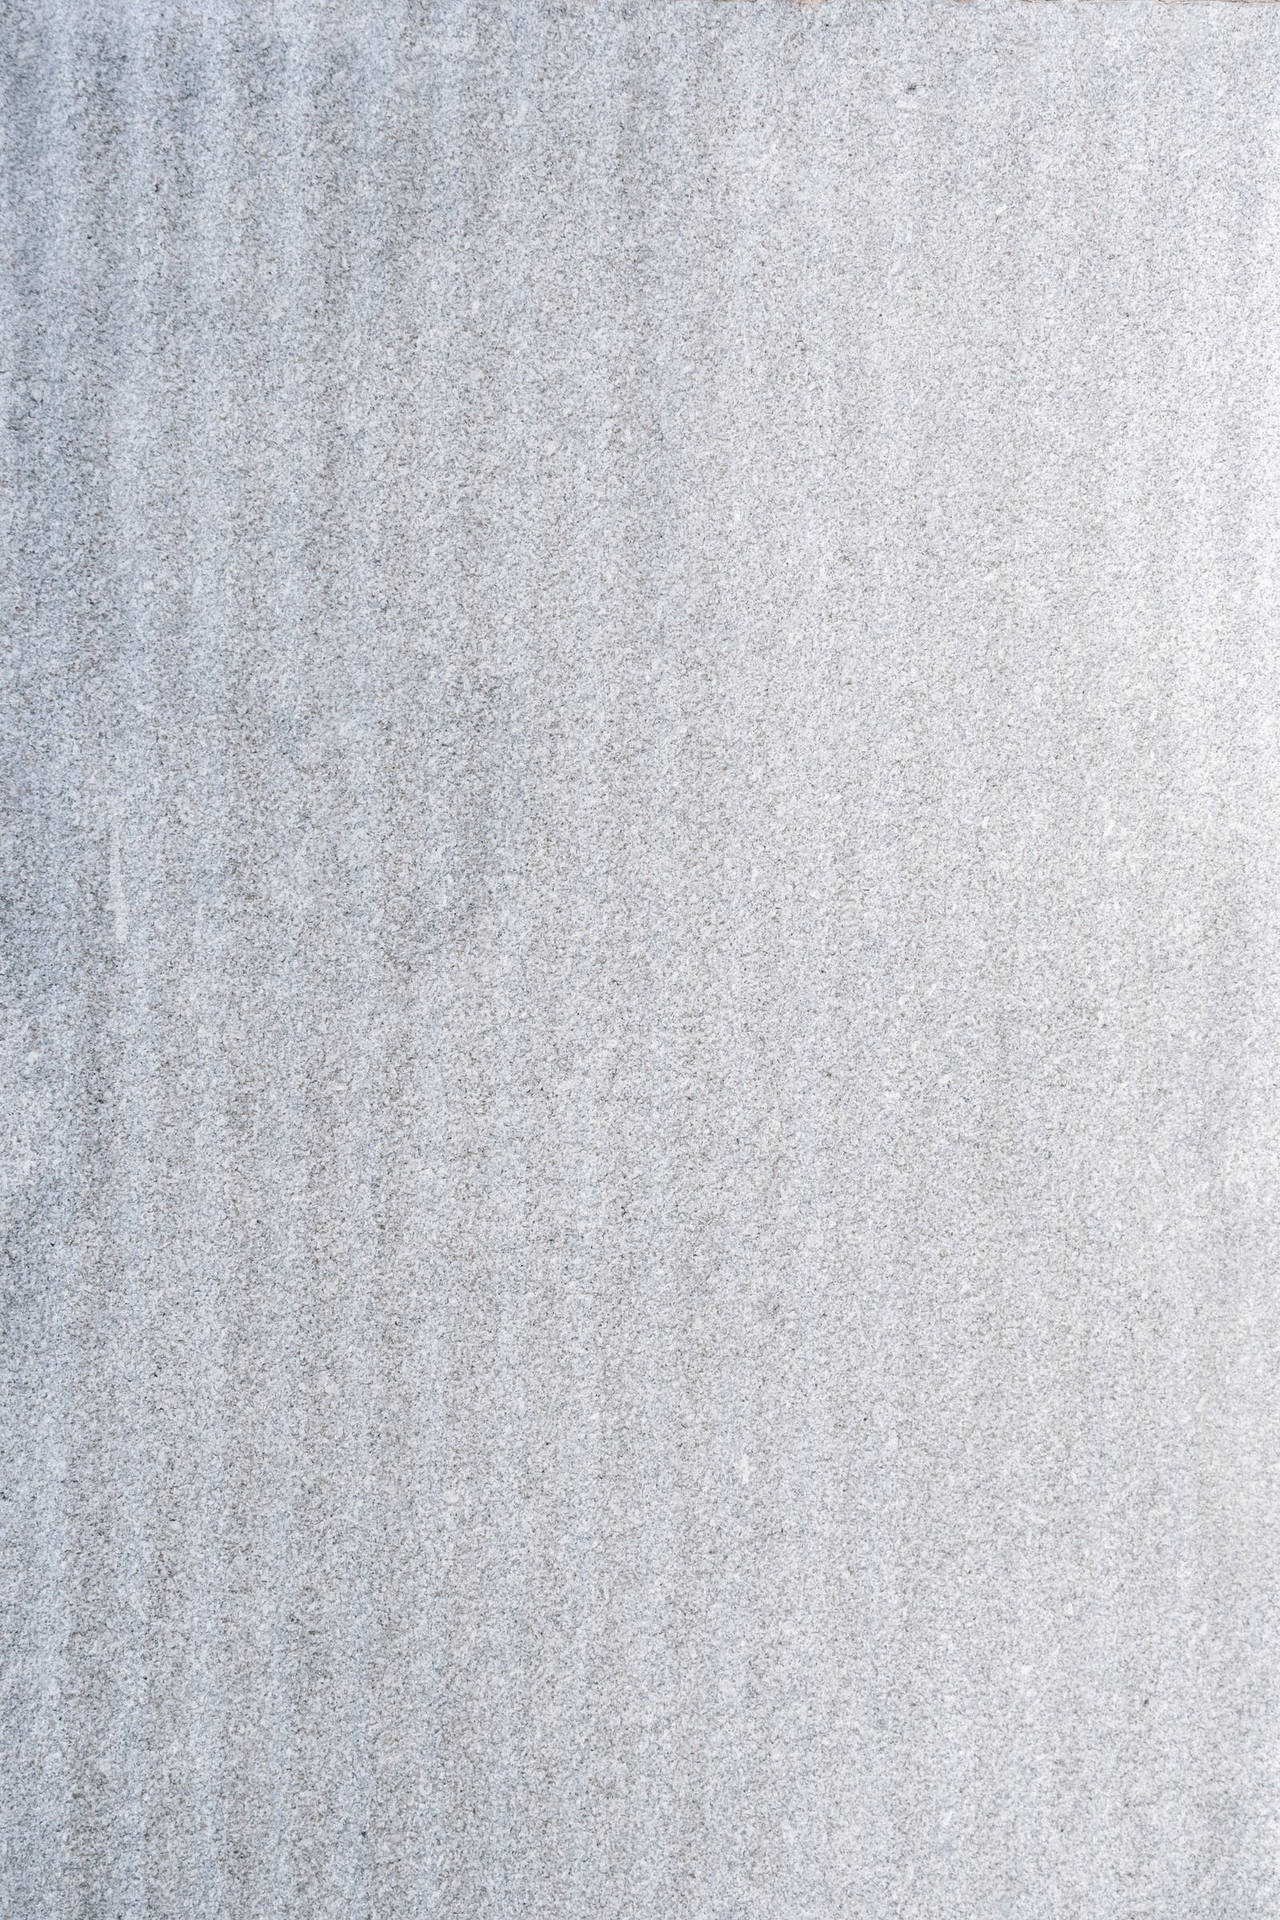 Plain Grey Linear Ombré Wallpaper